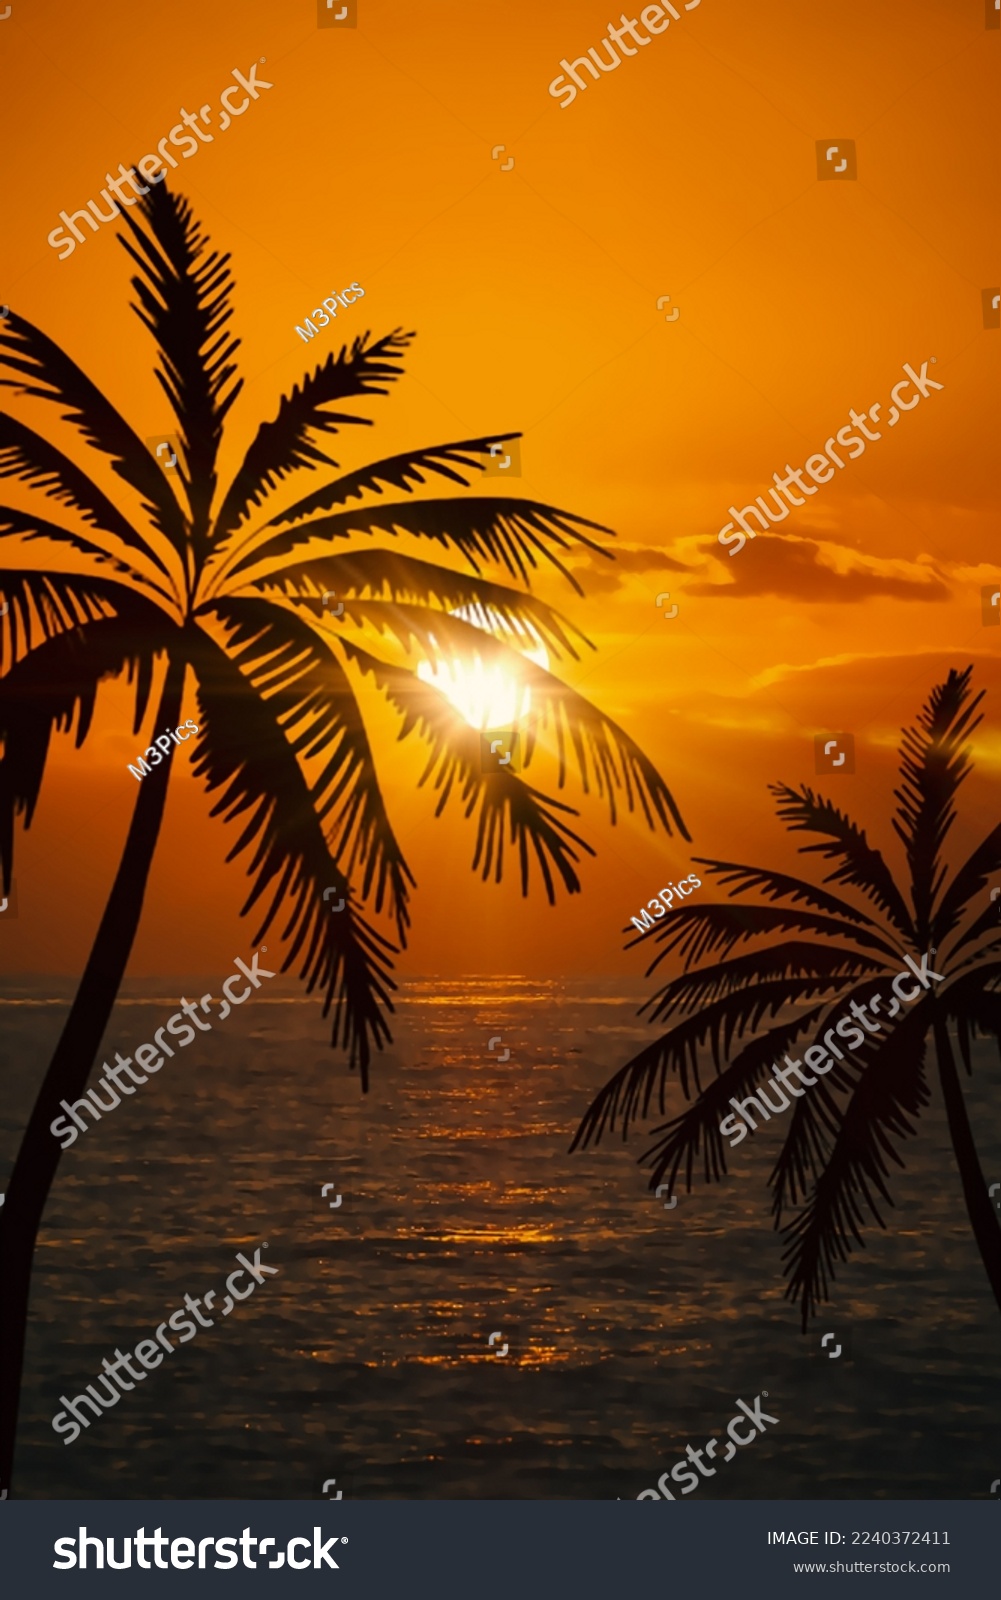 Beach Sunset Palm Tree Silhouette #2240372411